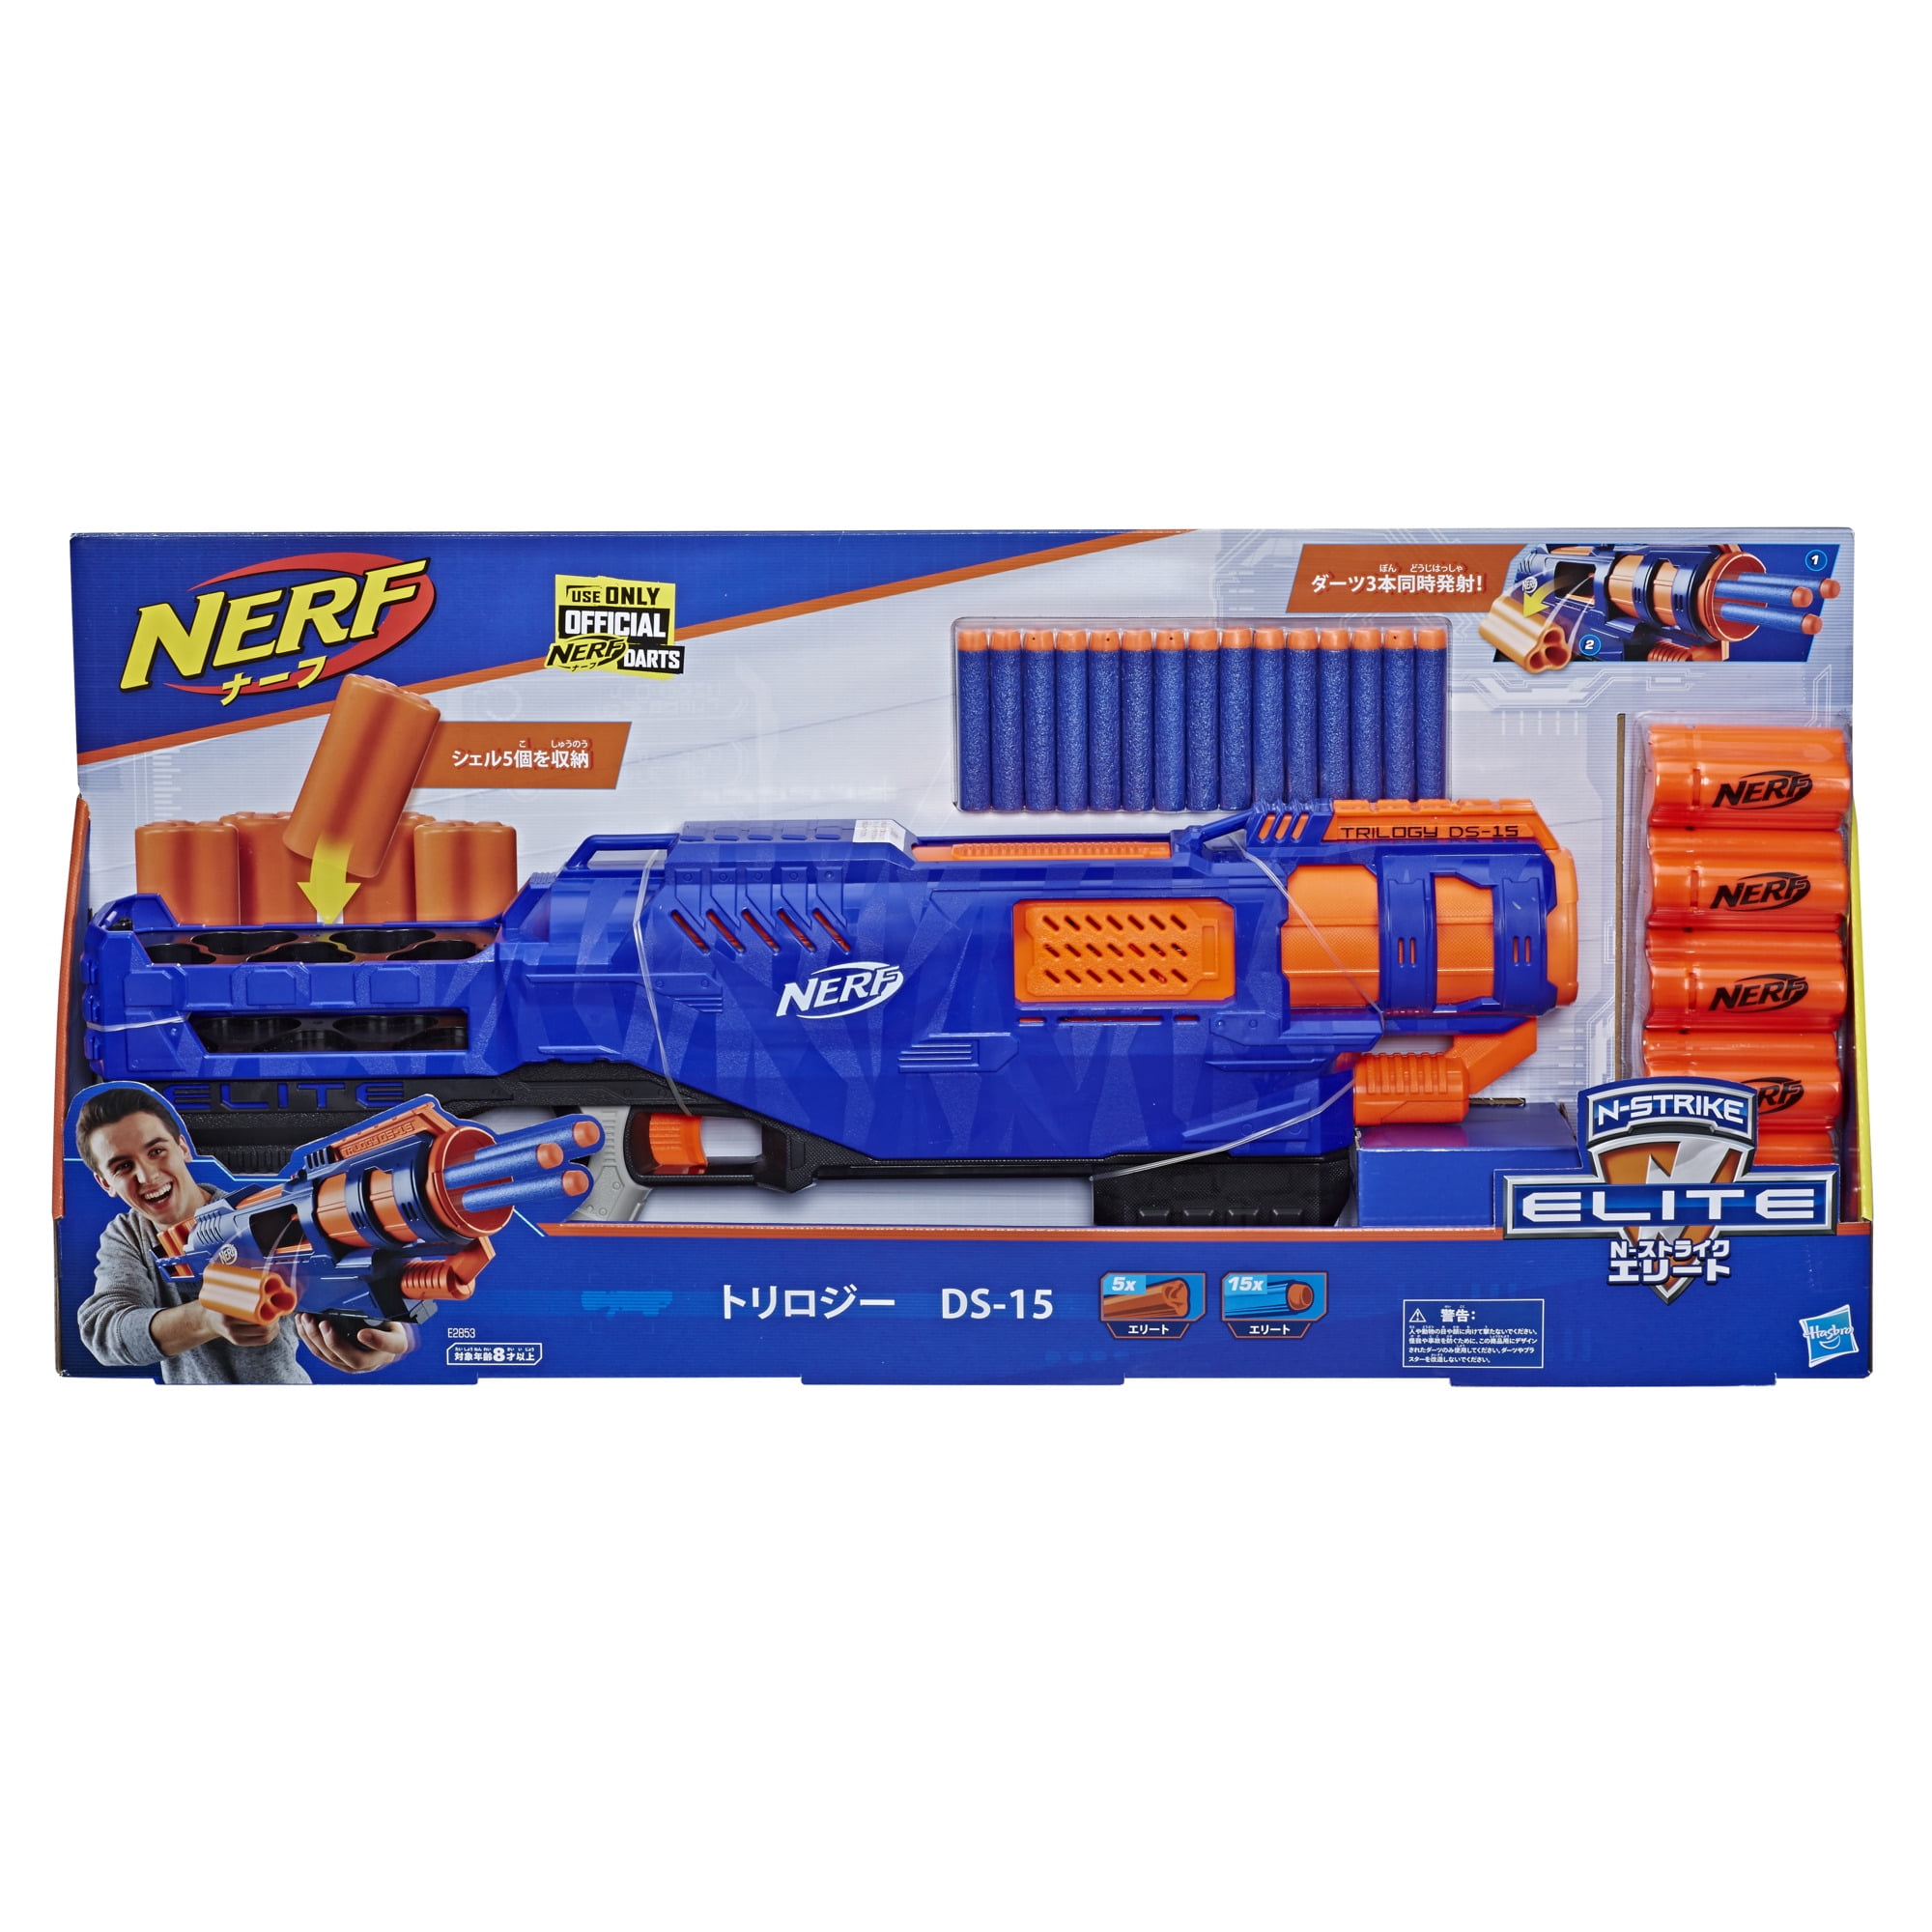 Hasbro E2853EU5 Trilogy DS15 Nerf NStrike Elite Spielzeug Blaster 15 Nerf Darts 